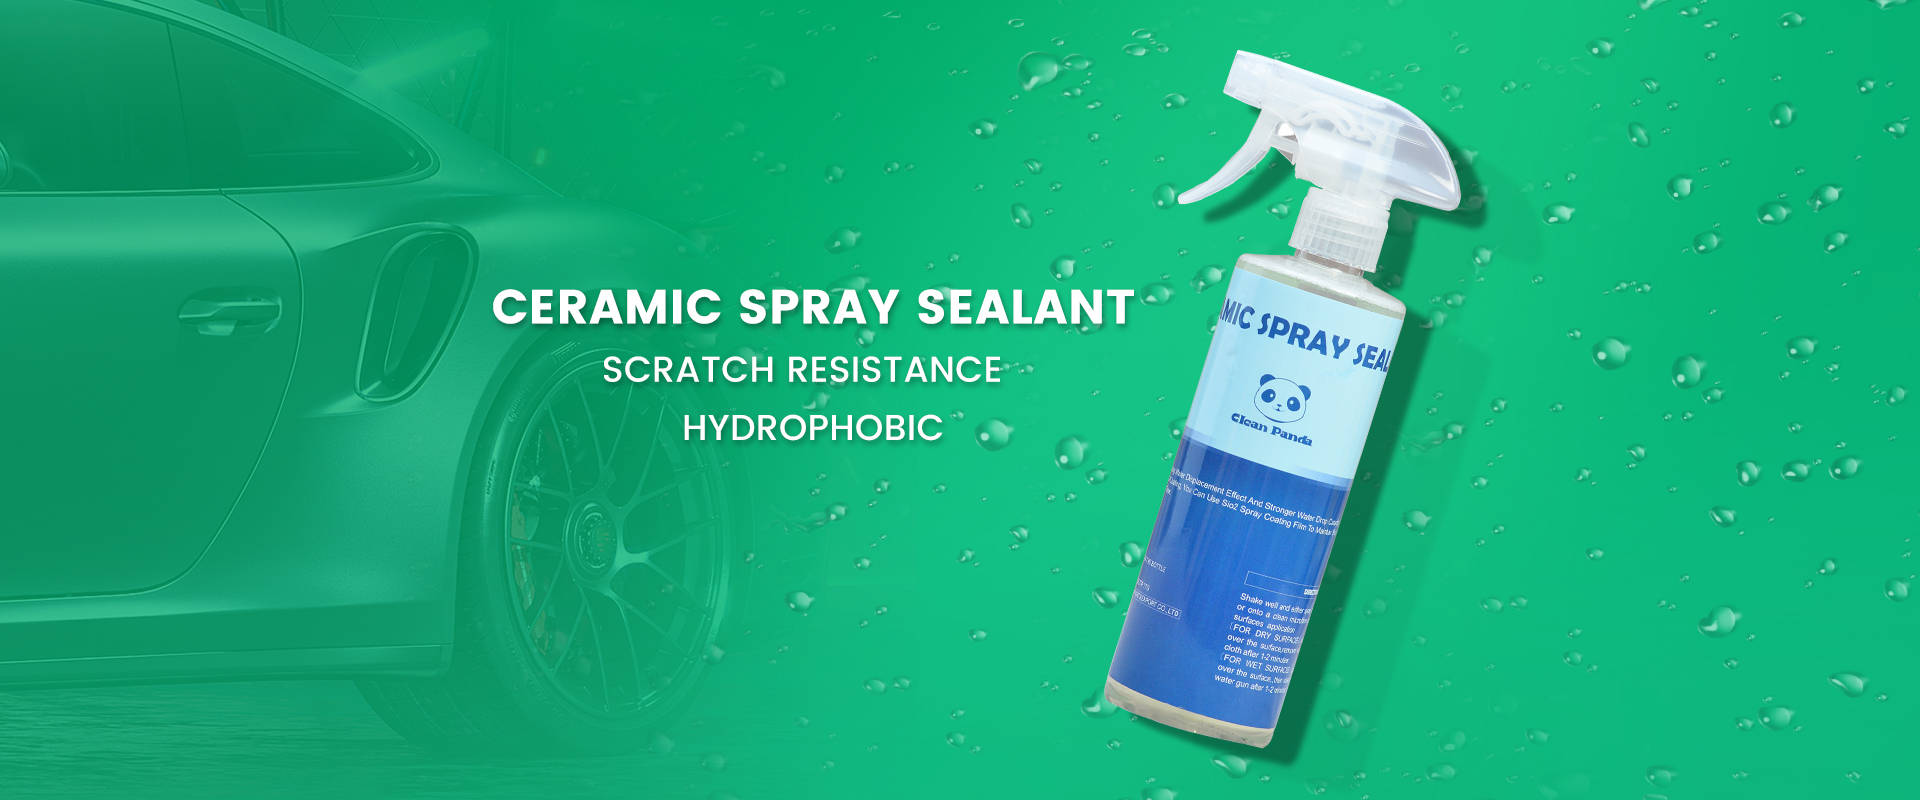 ceramic spray sealant ປ້າຍໂຄສະນາ